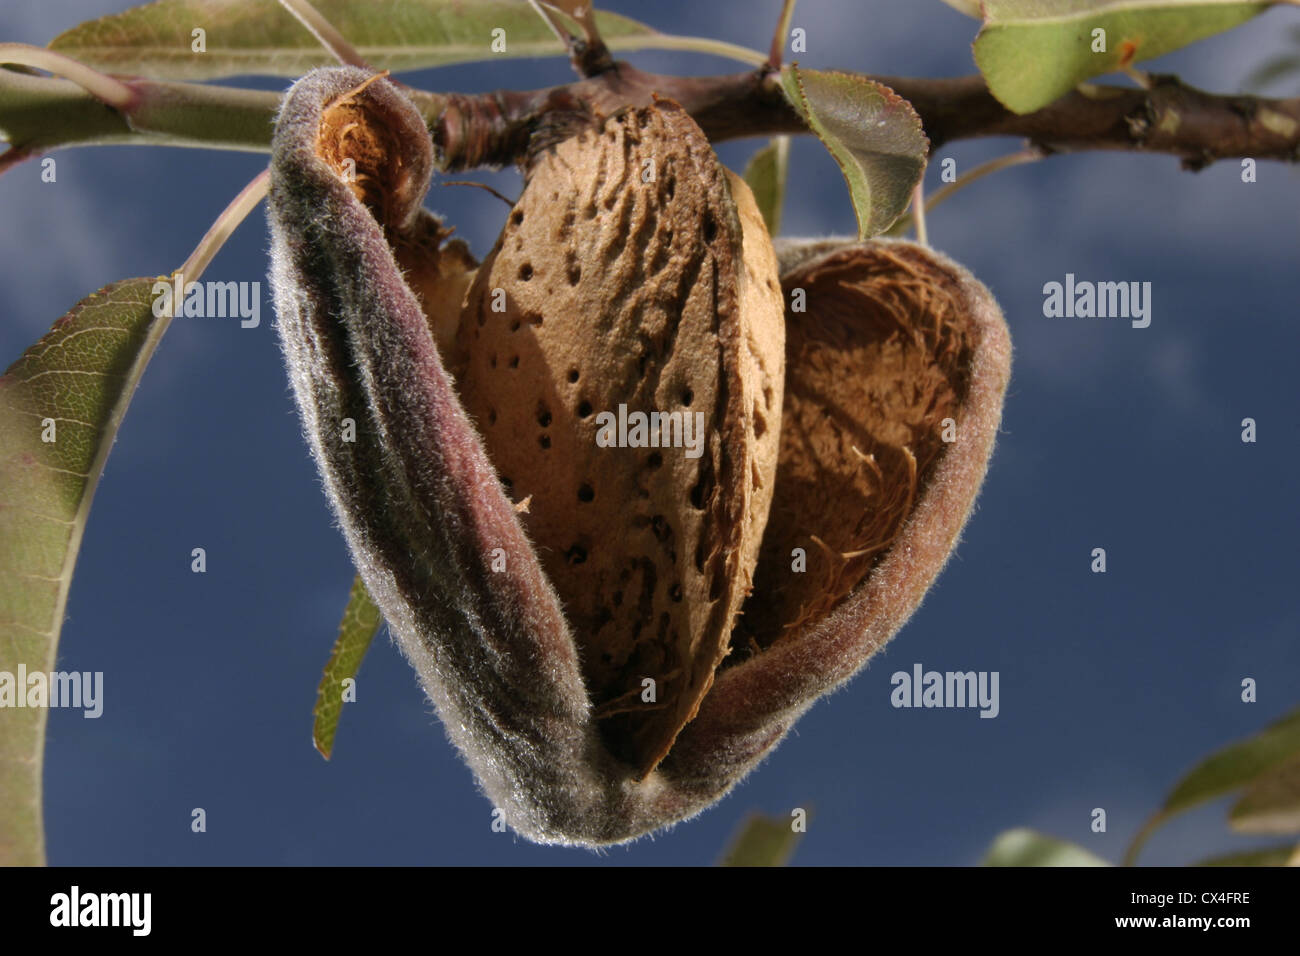 Immagine: Steve Race - Mollar mandorle (Prunus dulcis) maturare sull'albero, Catalunya, Spagna. Foto Stock